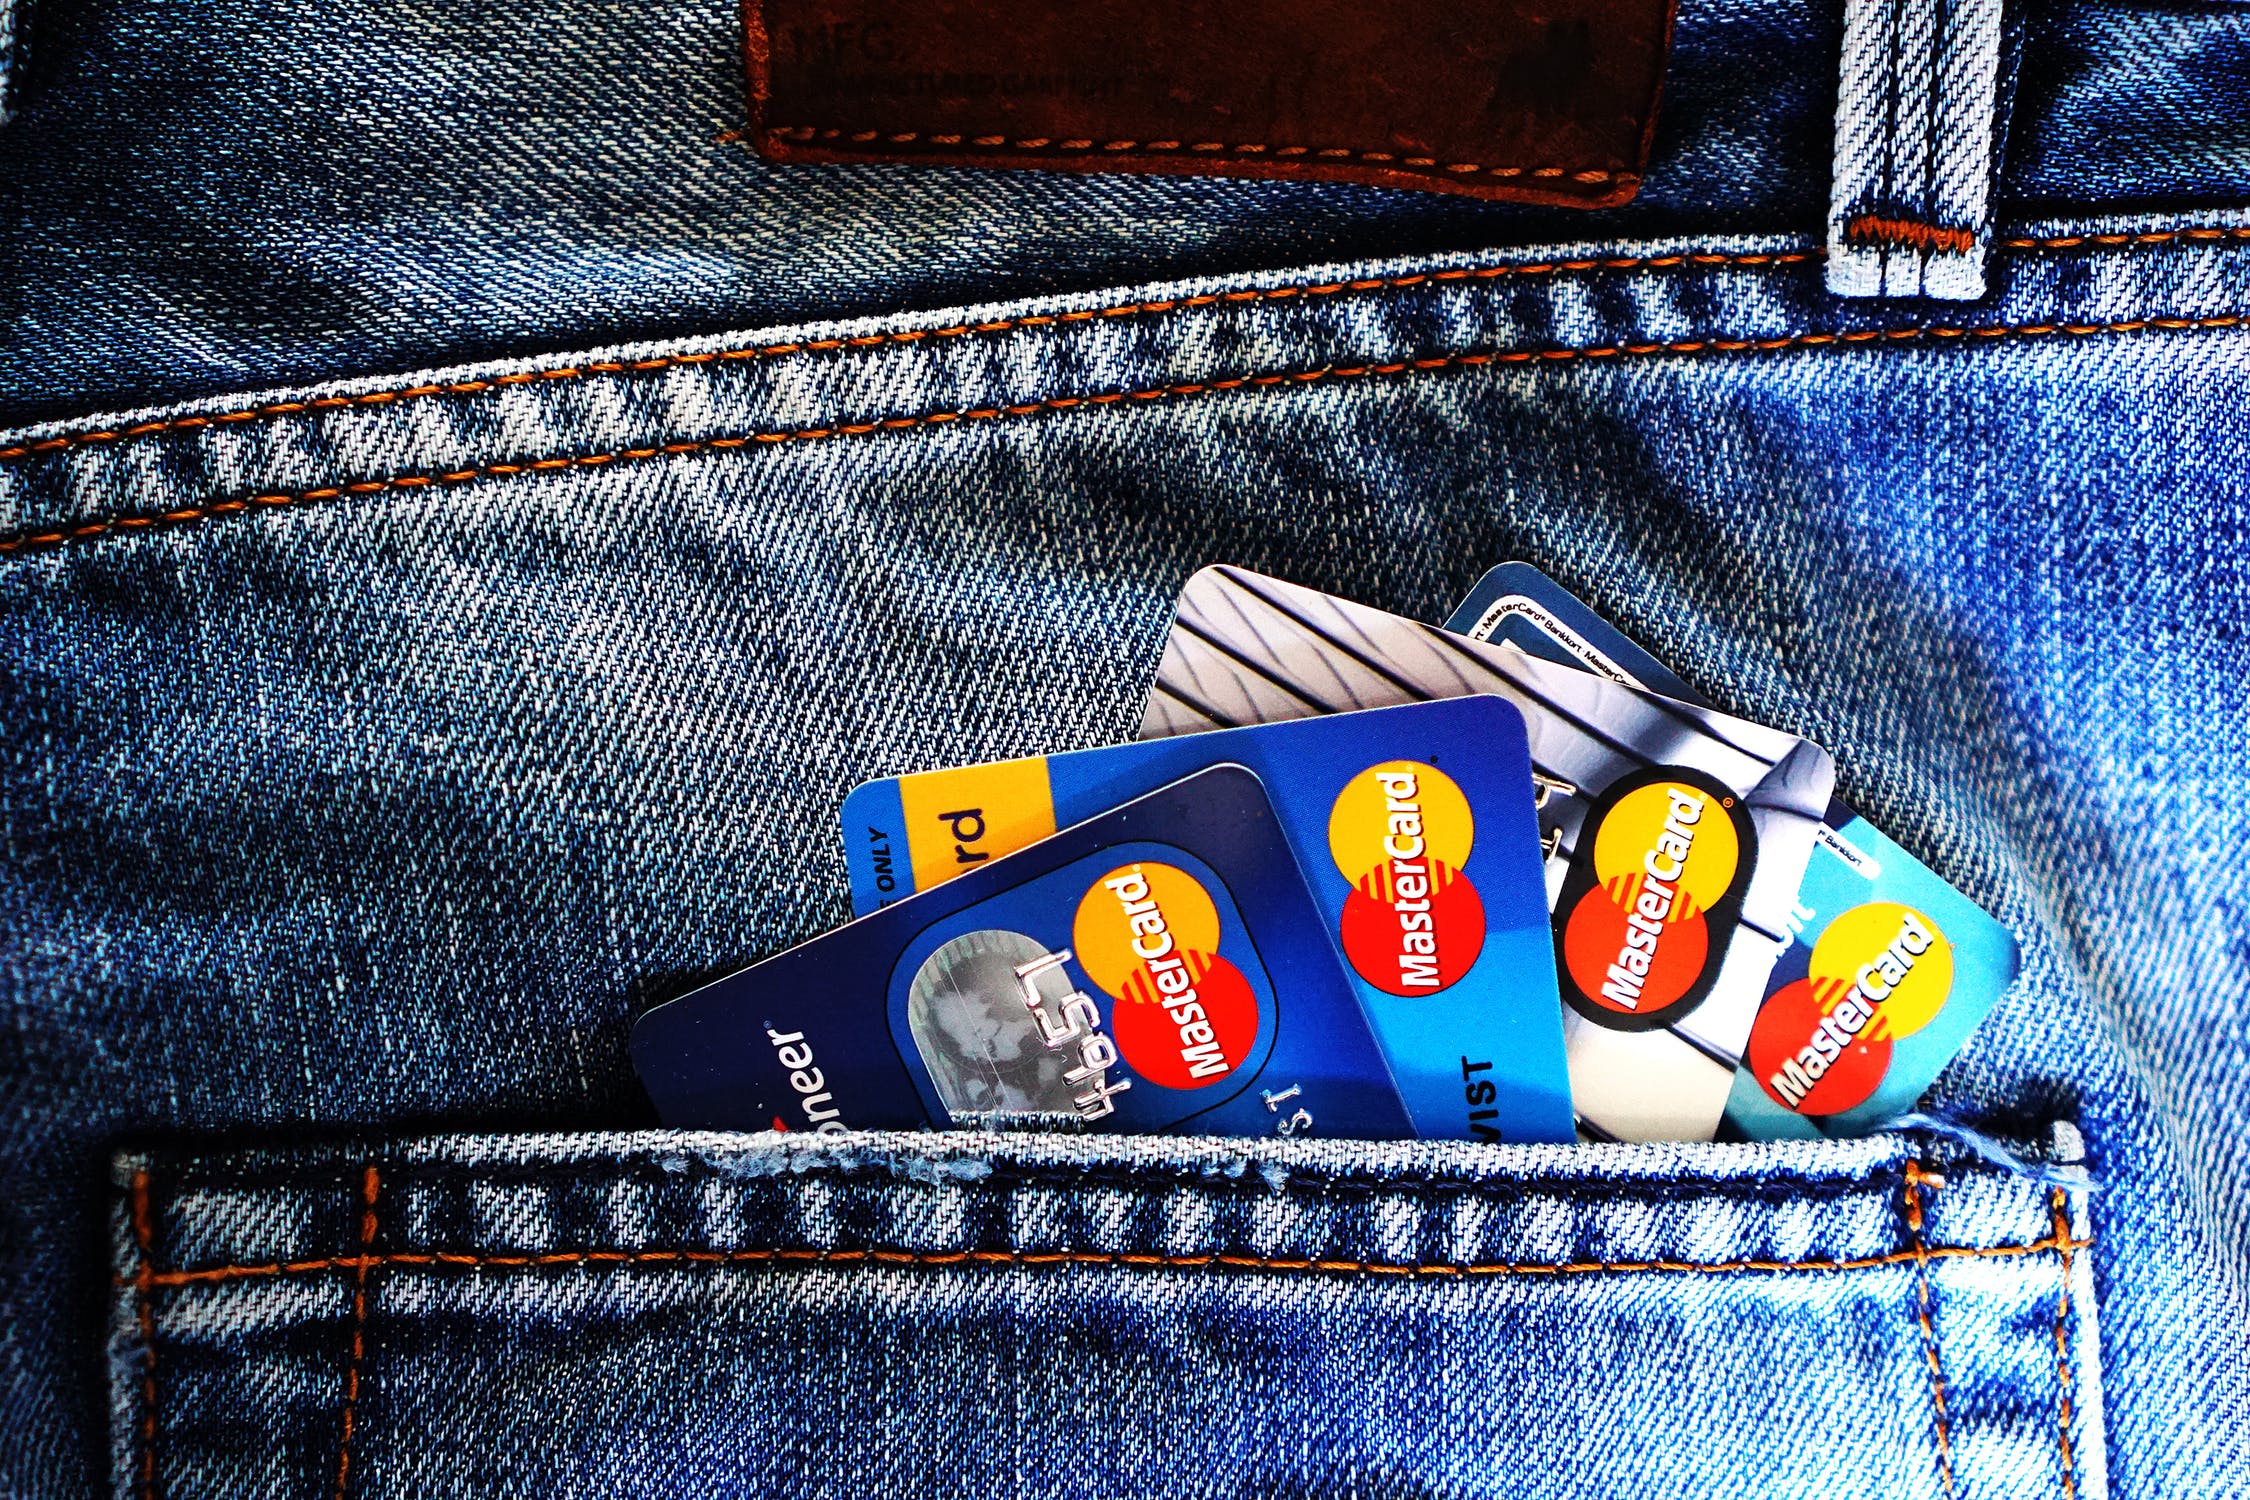 Zero Fee Credit Card Processing